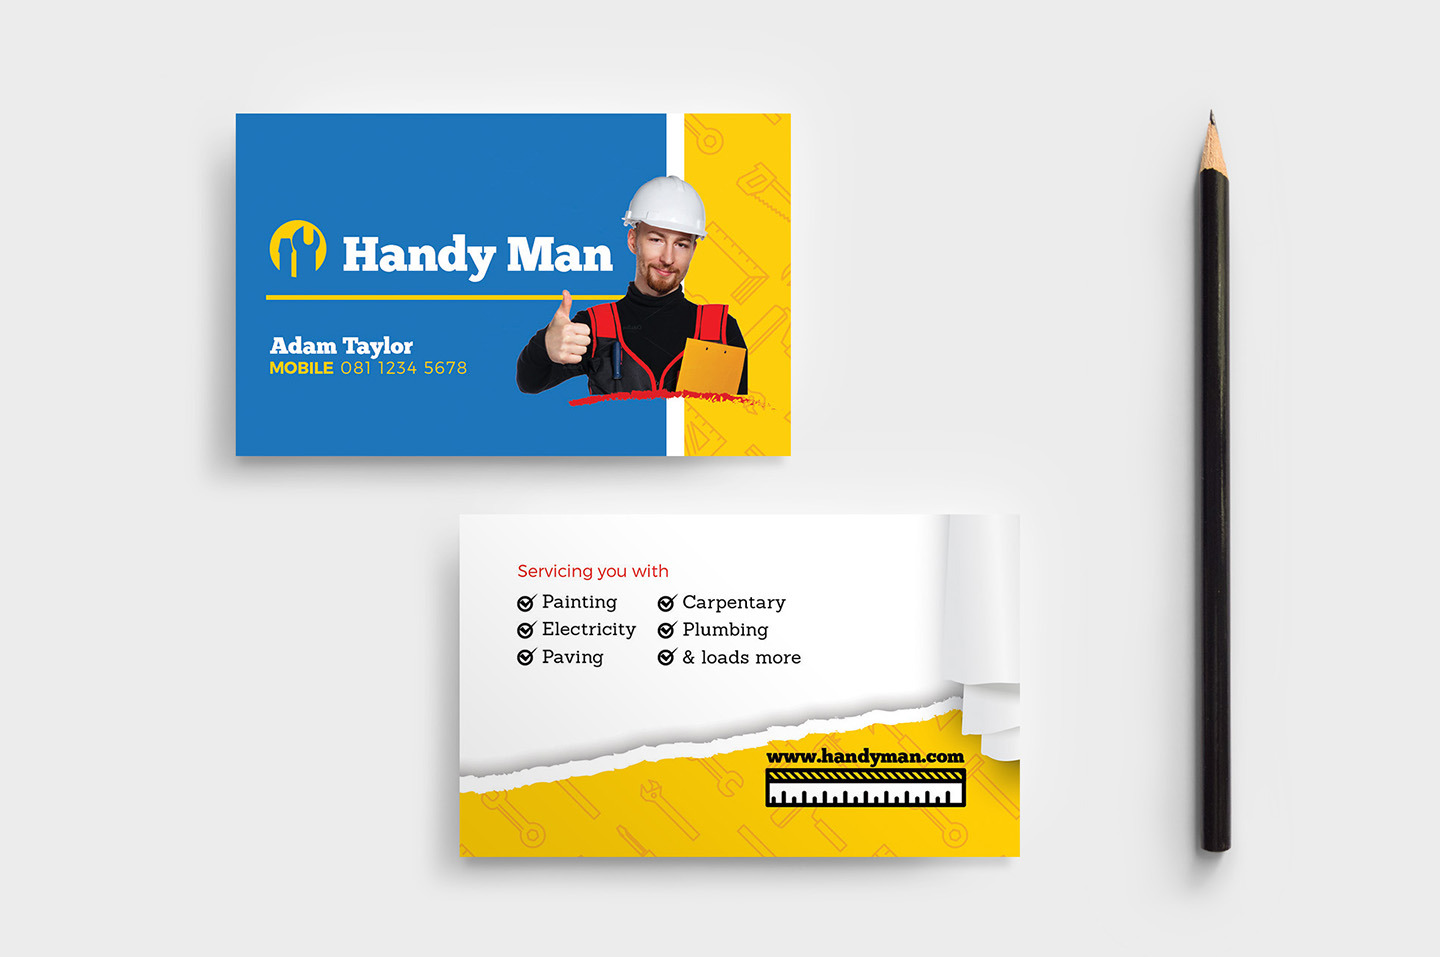 handyman-business-card-template-business-card-templates-creative-market